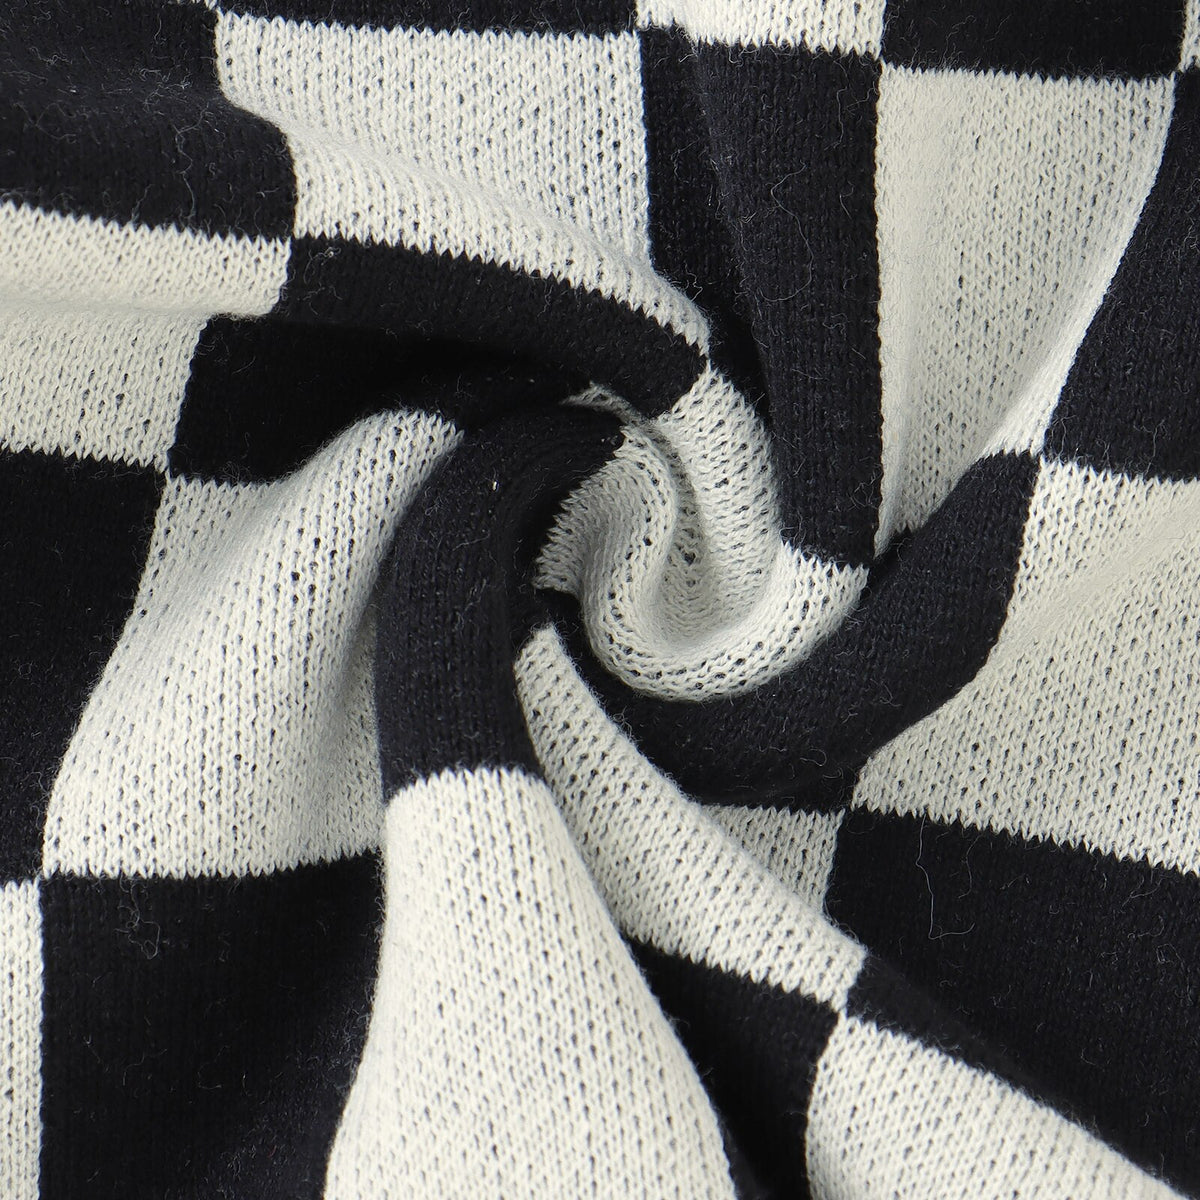 Checkers Knit Romper | Black & White